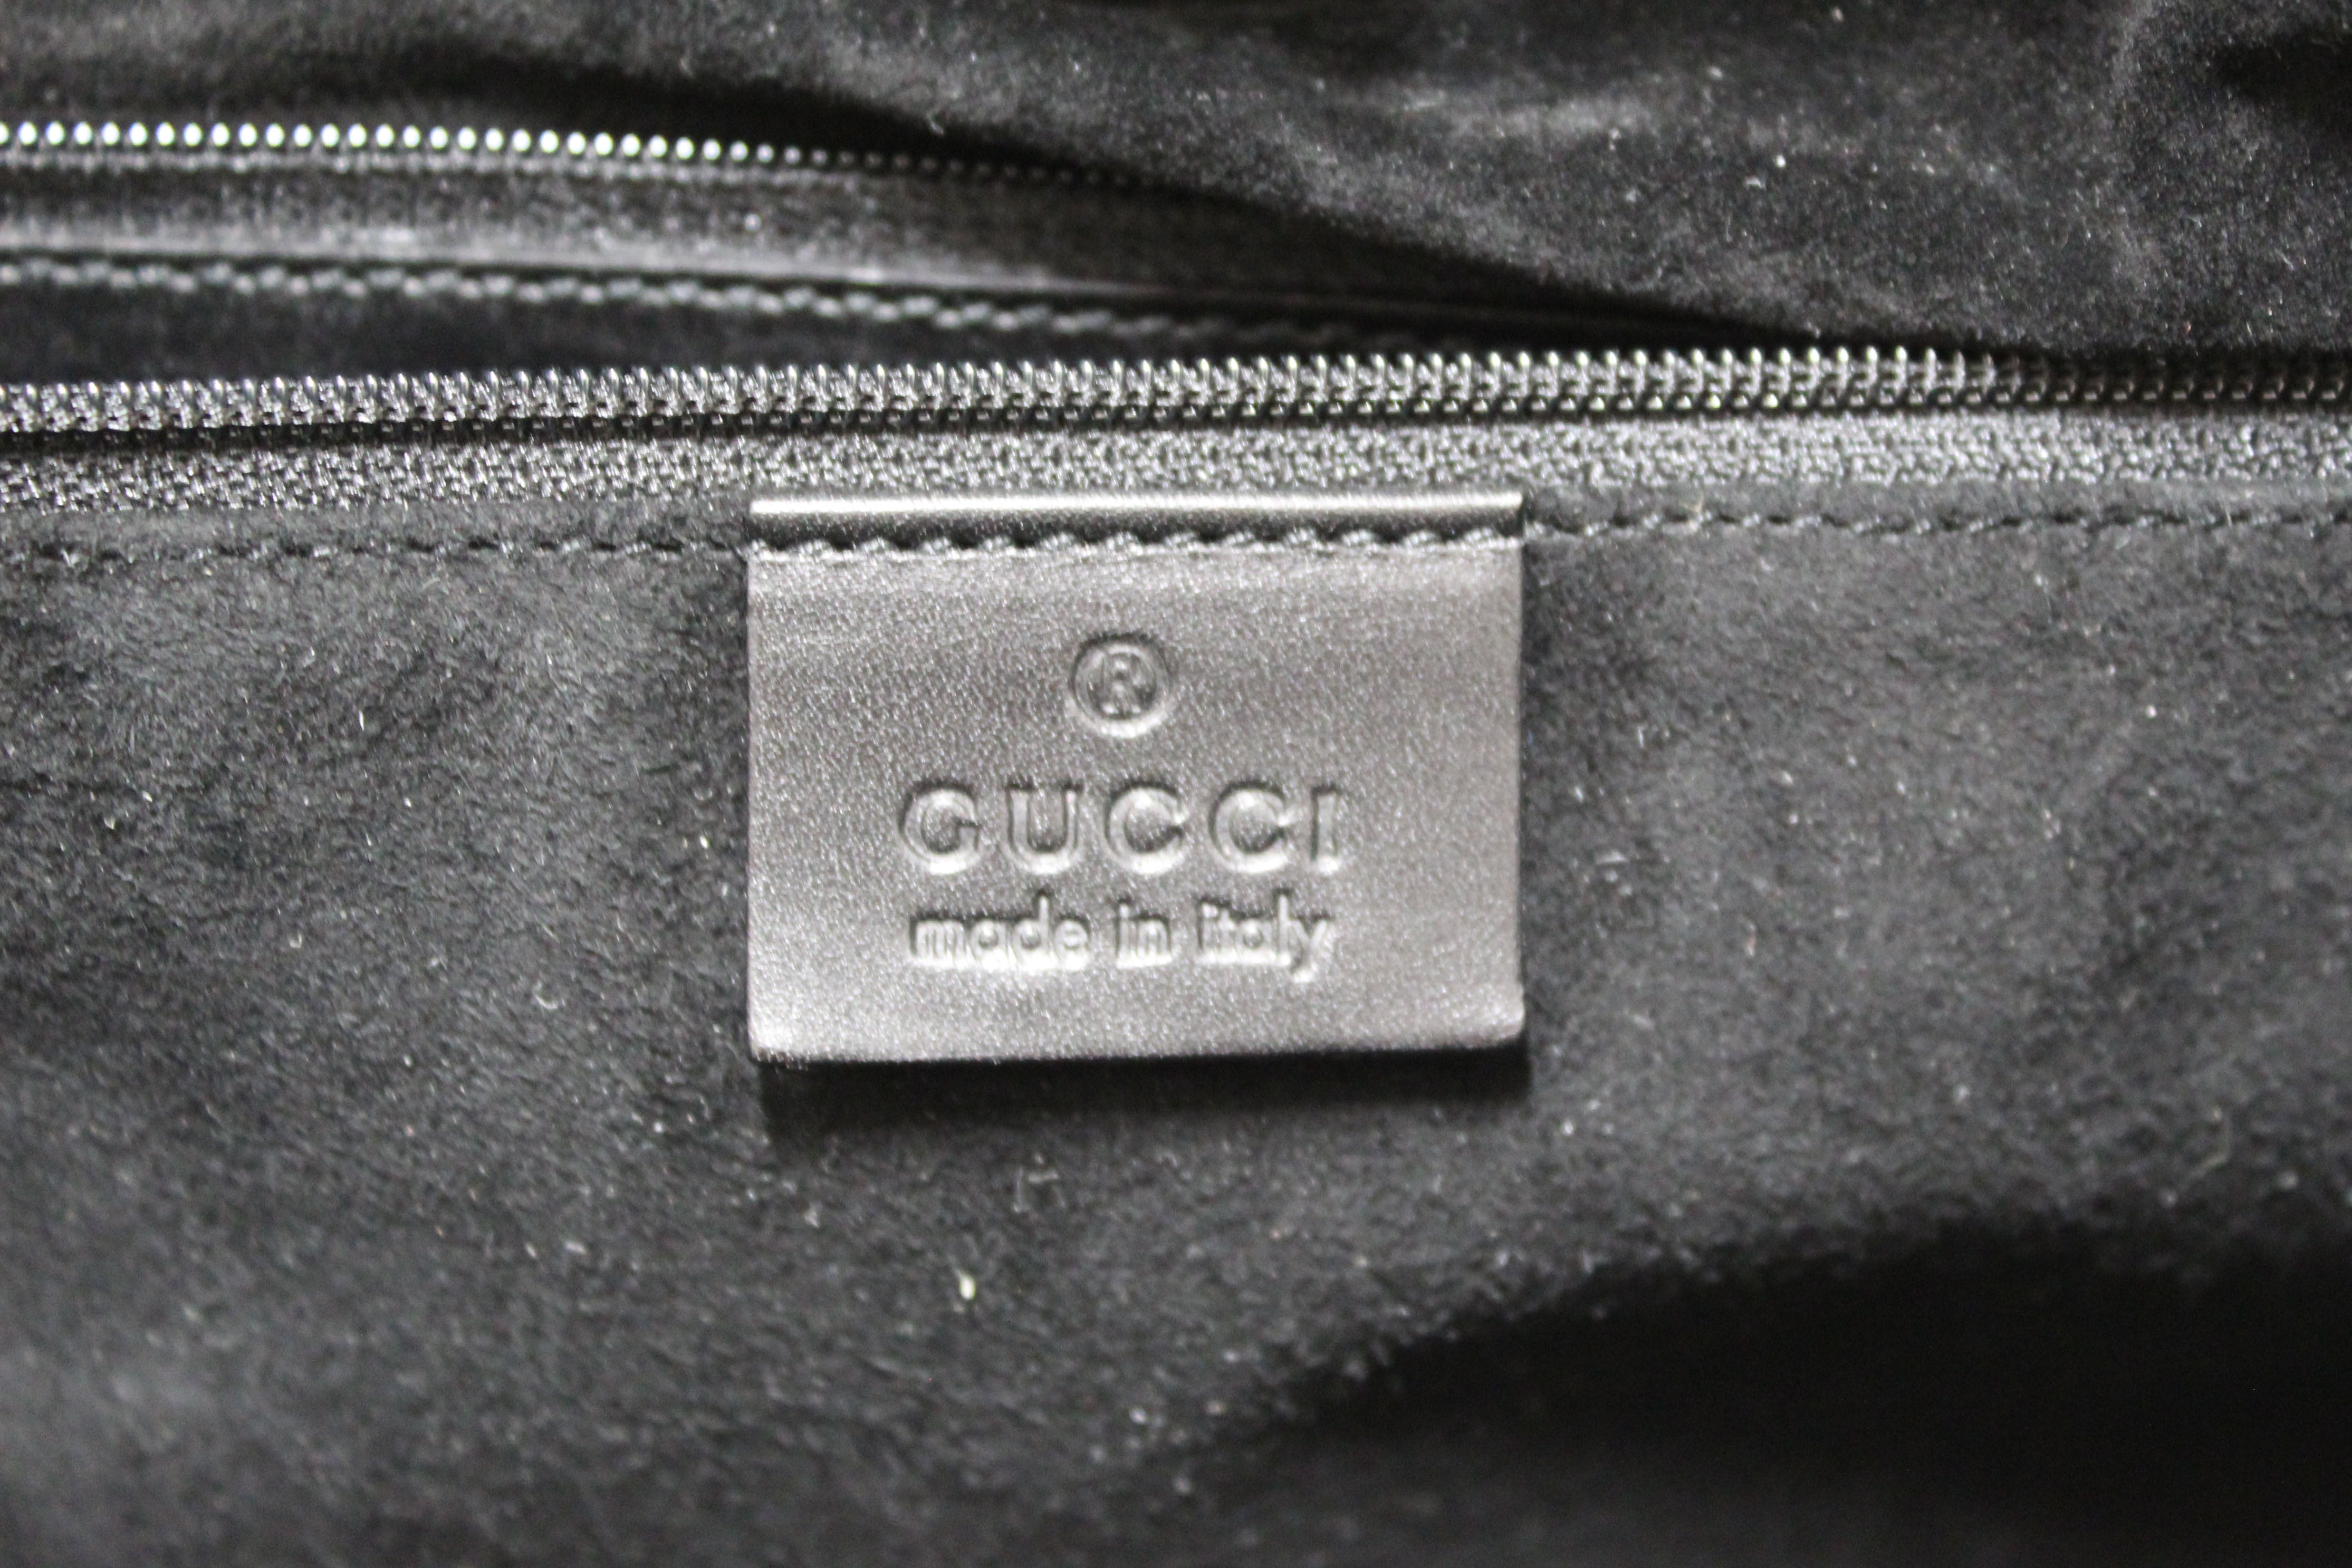 Authentic Gucci Black Suede Leather Hobo Shoulder Bag